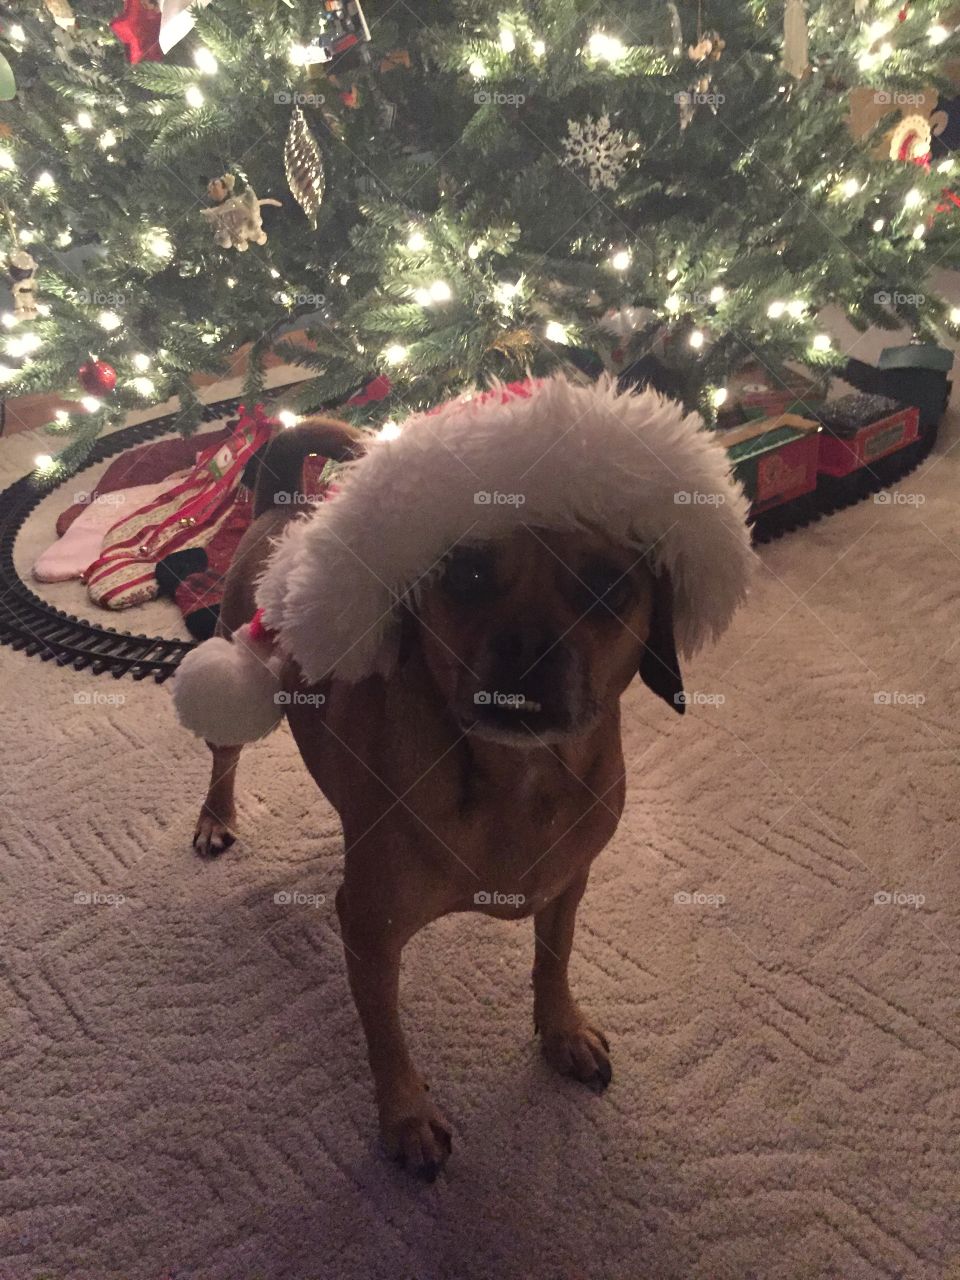 Dog with Santa hat on under Christmas tree